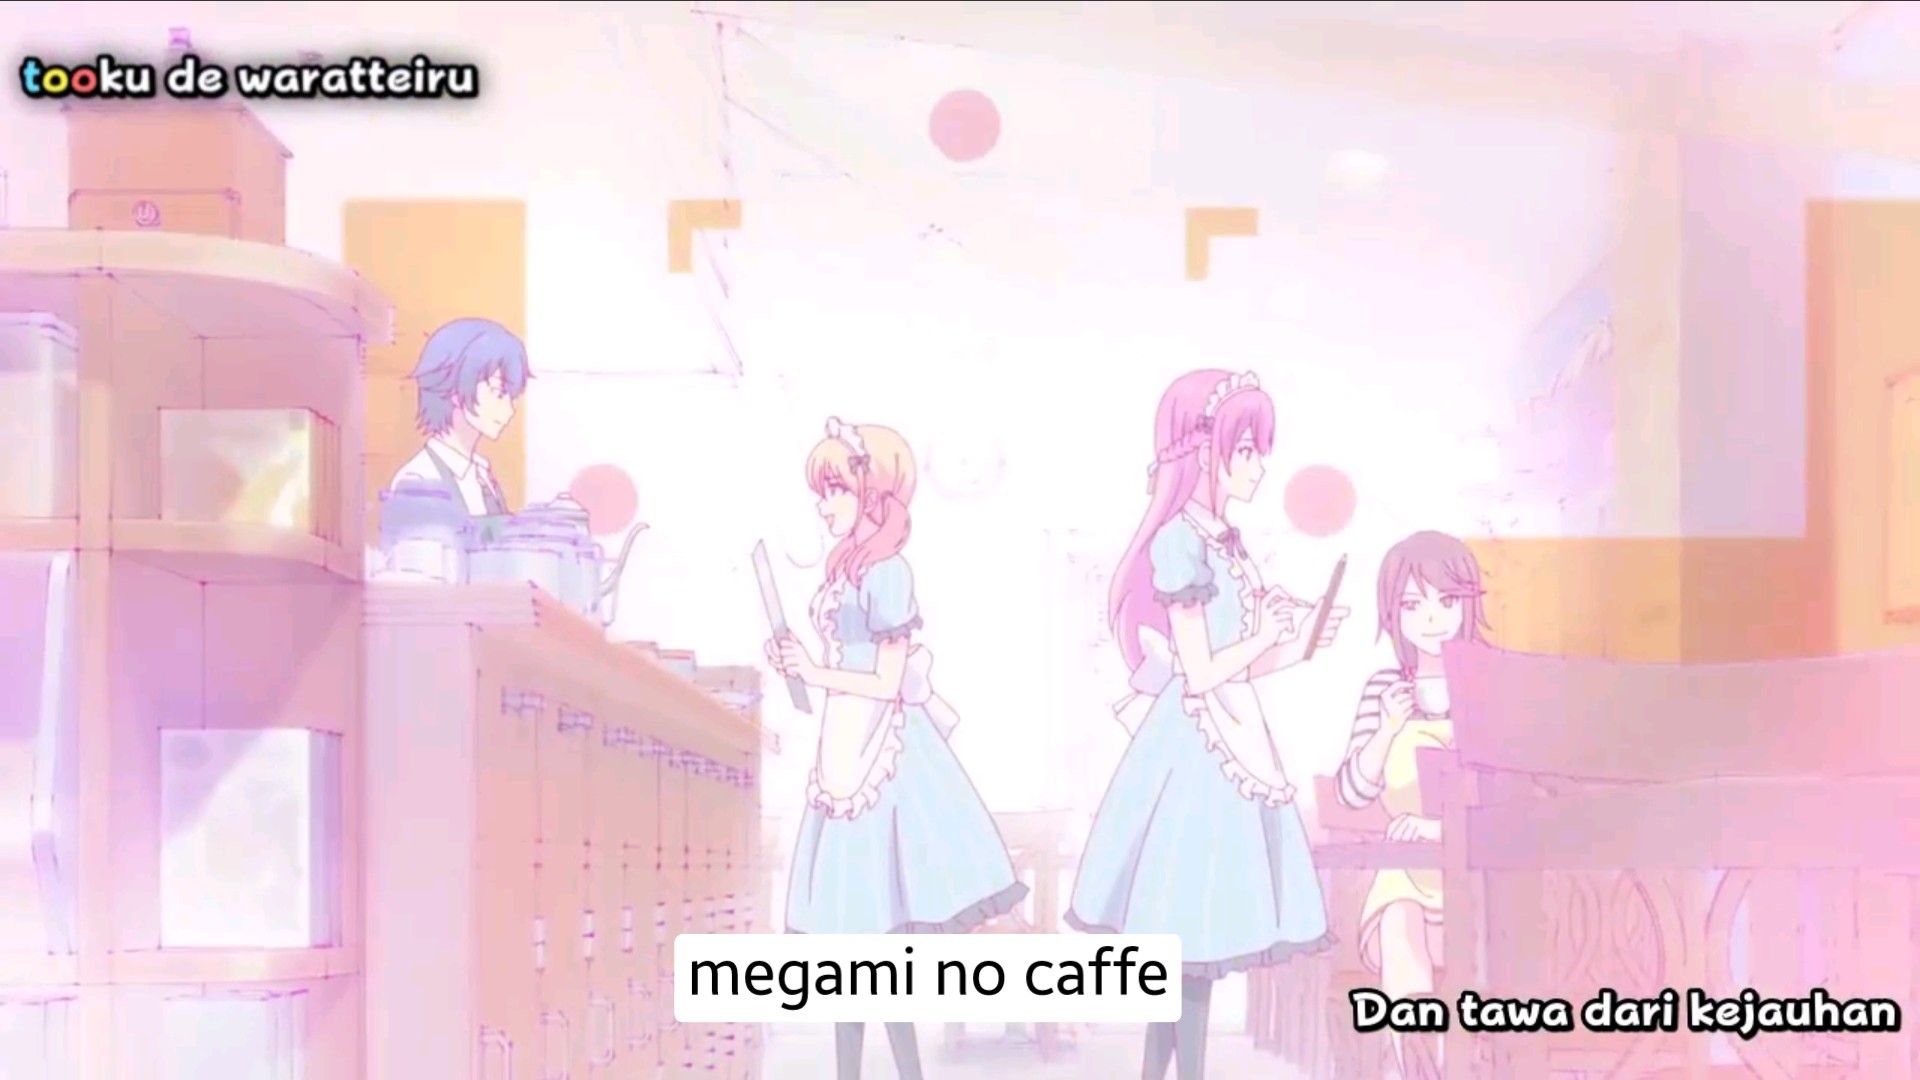 Ending Yg tak Terduga dari Megami no caffe terrace☺️ - BiliBili